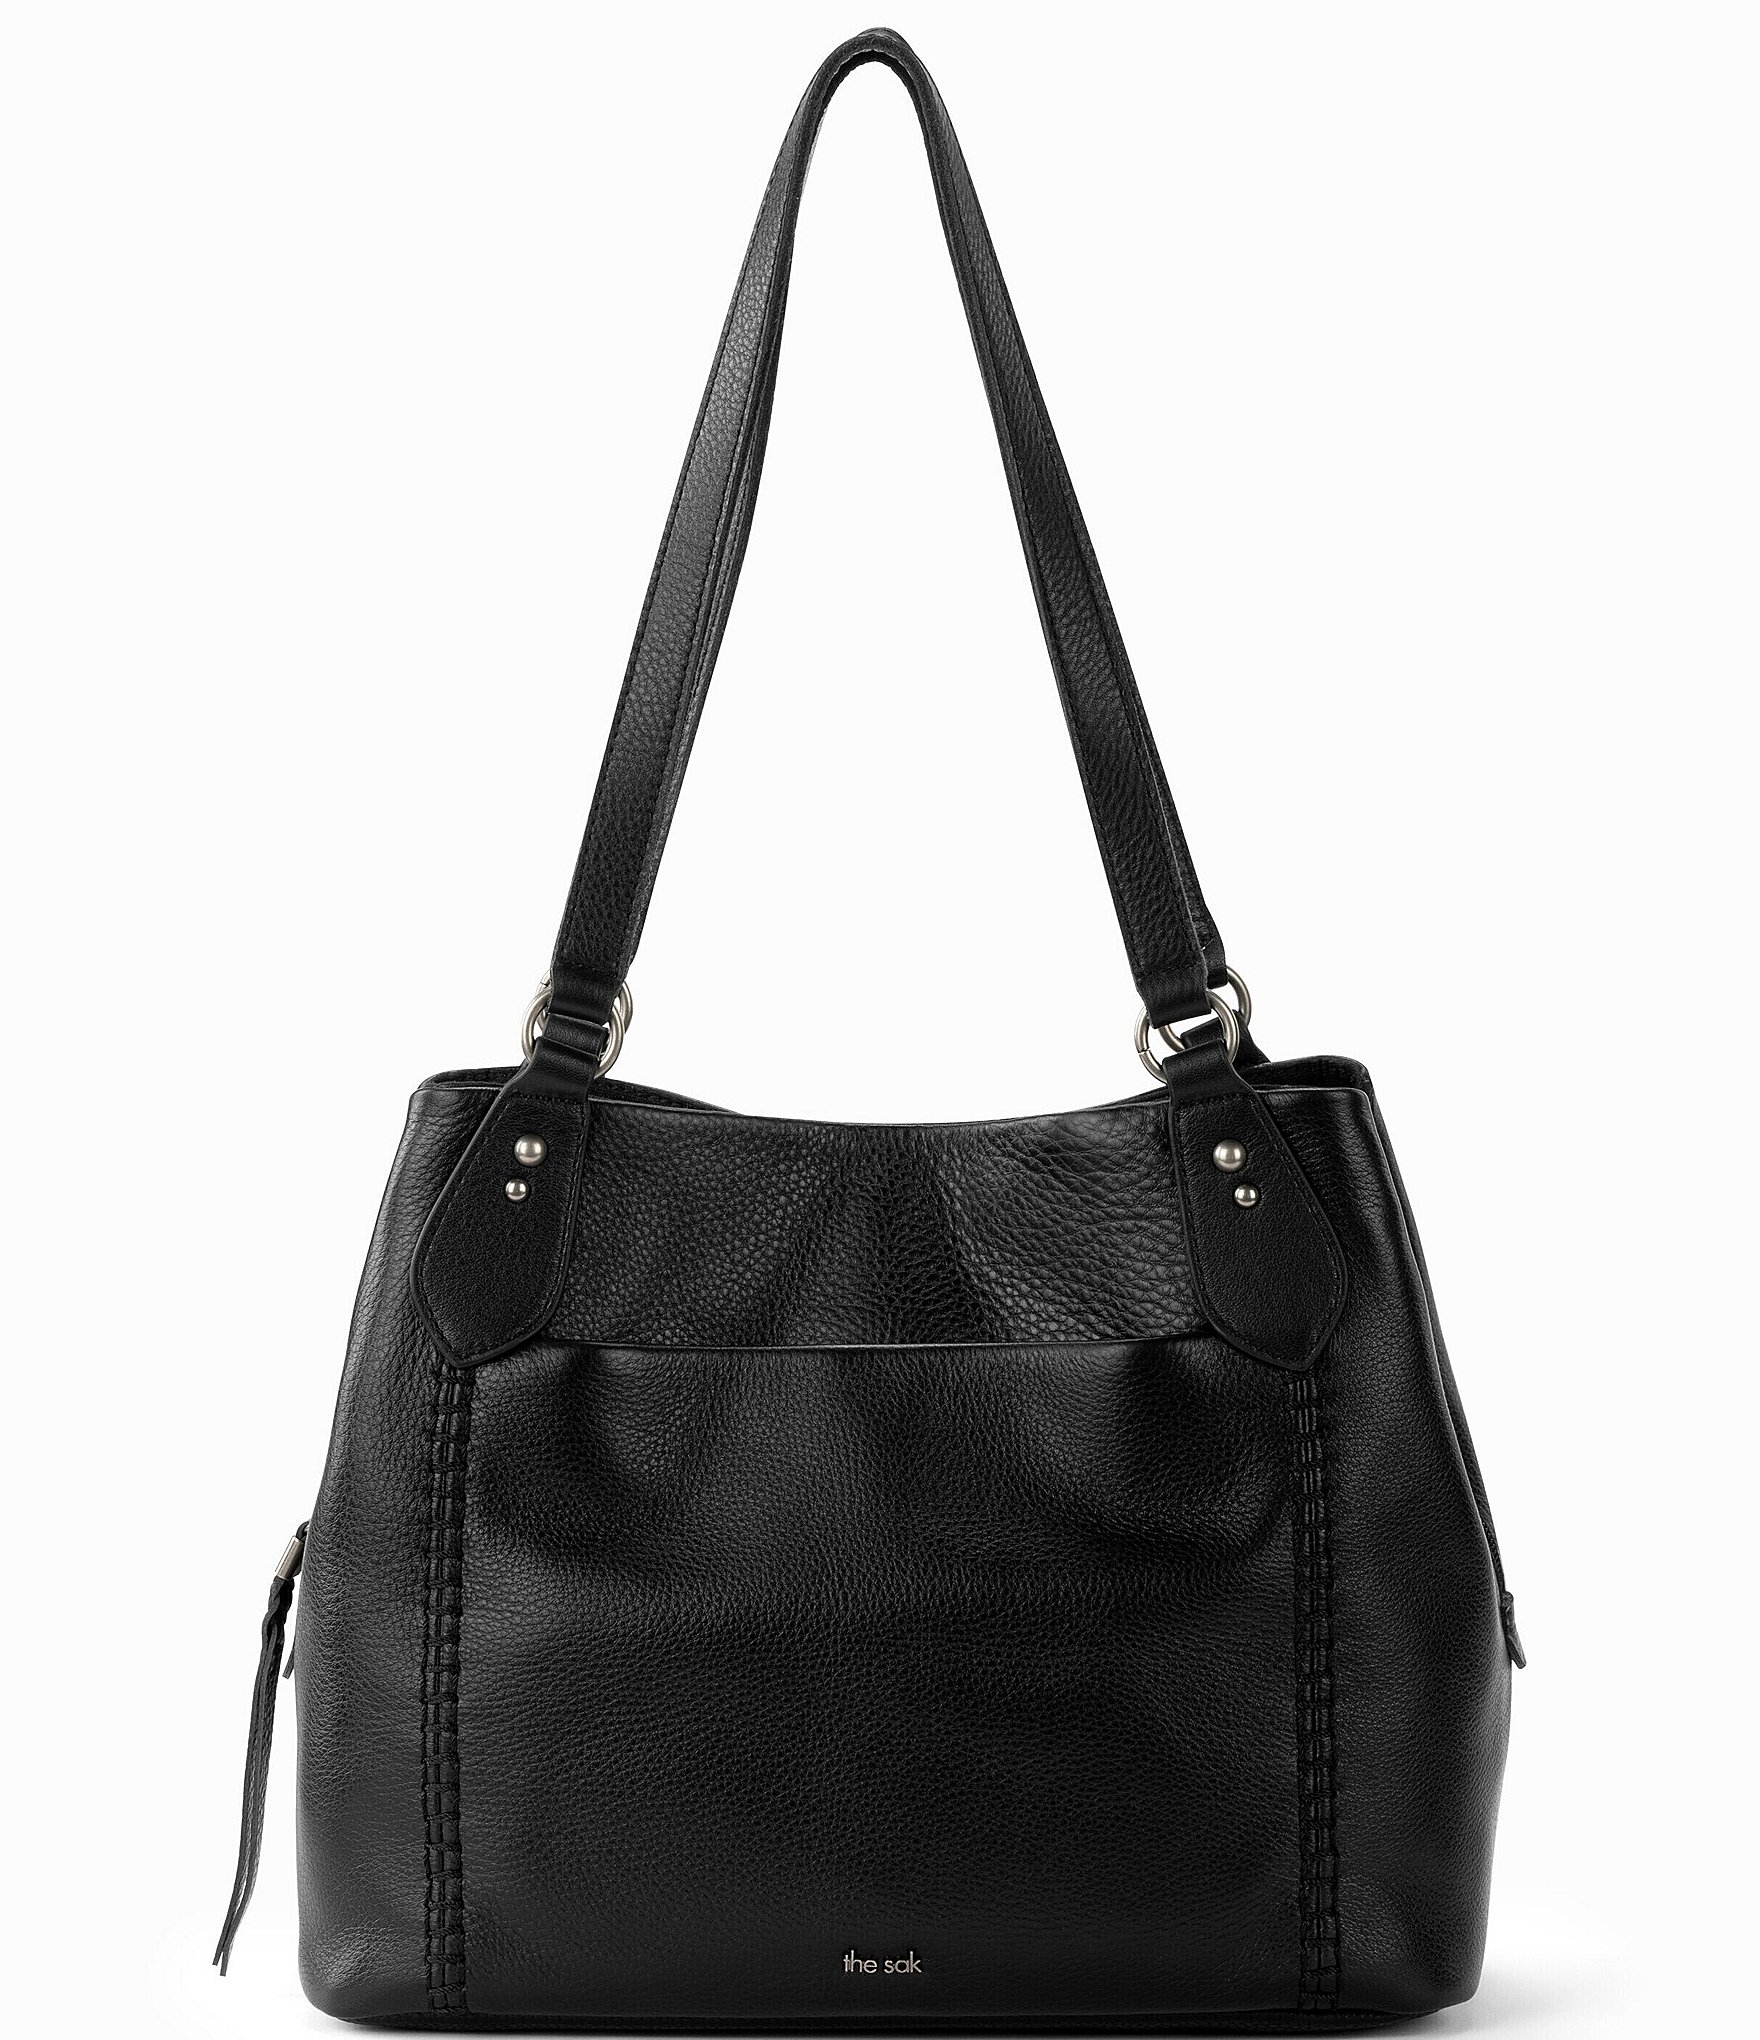 Opinions on The Sak? : r/handbags